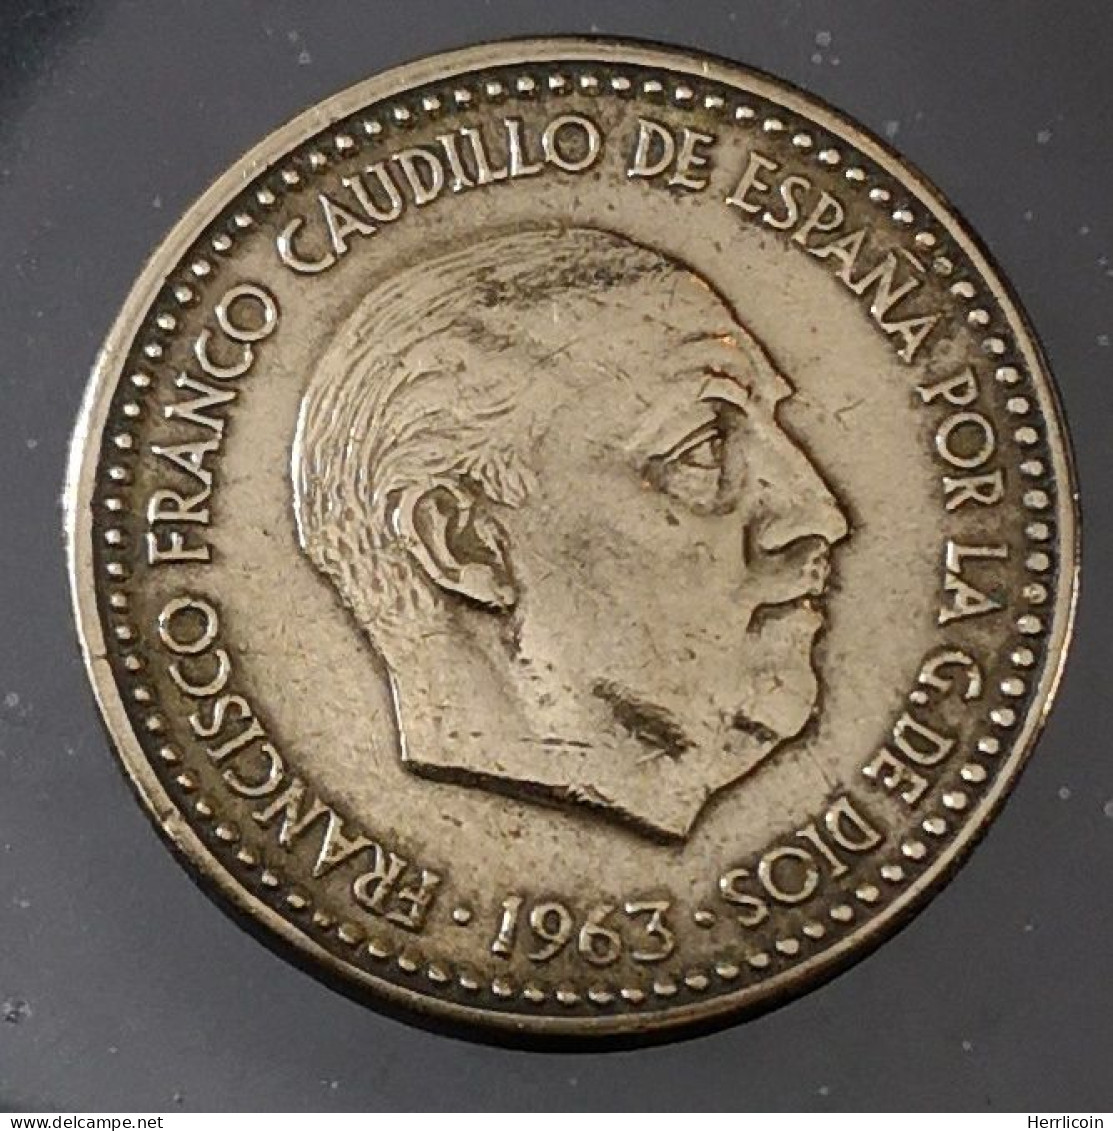 Monnaie Espagne - 1965 - 1 Peseta Franco 1re Effigie - 1 Peseta